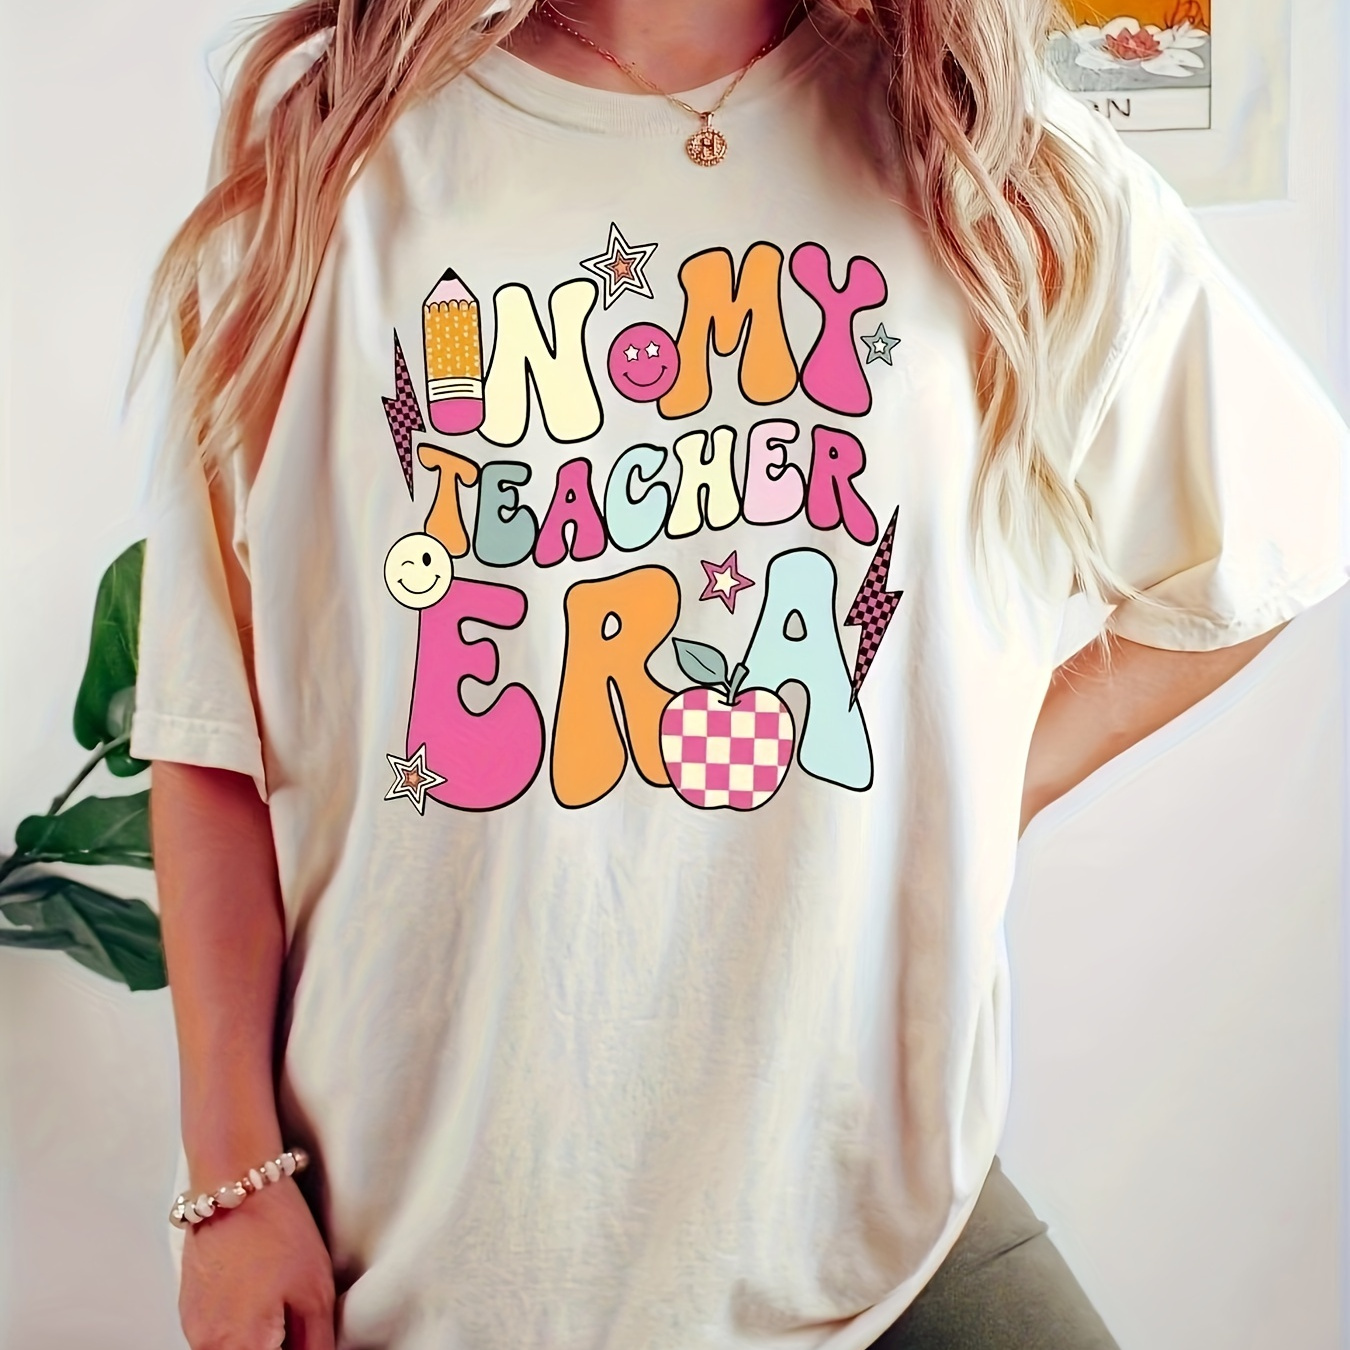 

Teacher & Pencil Print T-shirt, Casual Crew Neck Short Sleeve Top For Spring & Summer, Women's Clothing